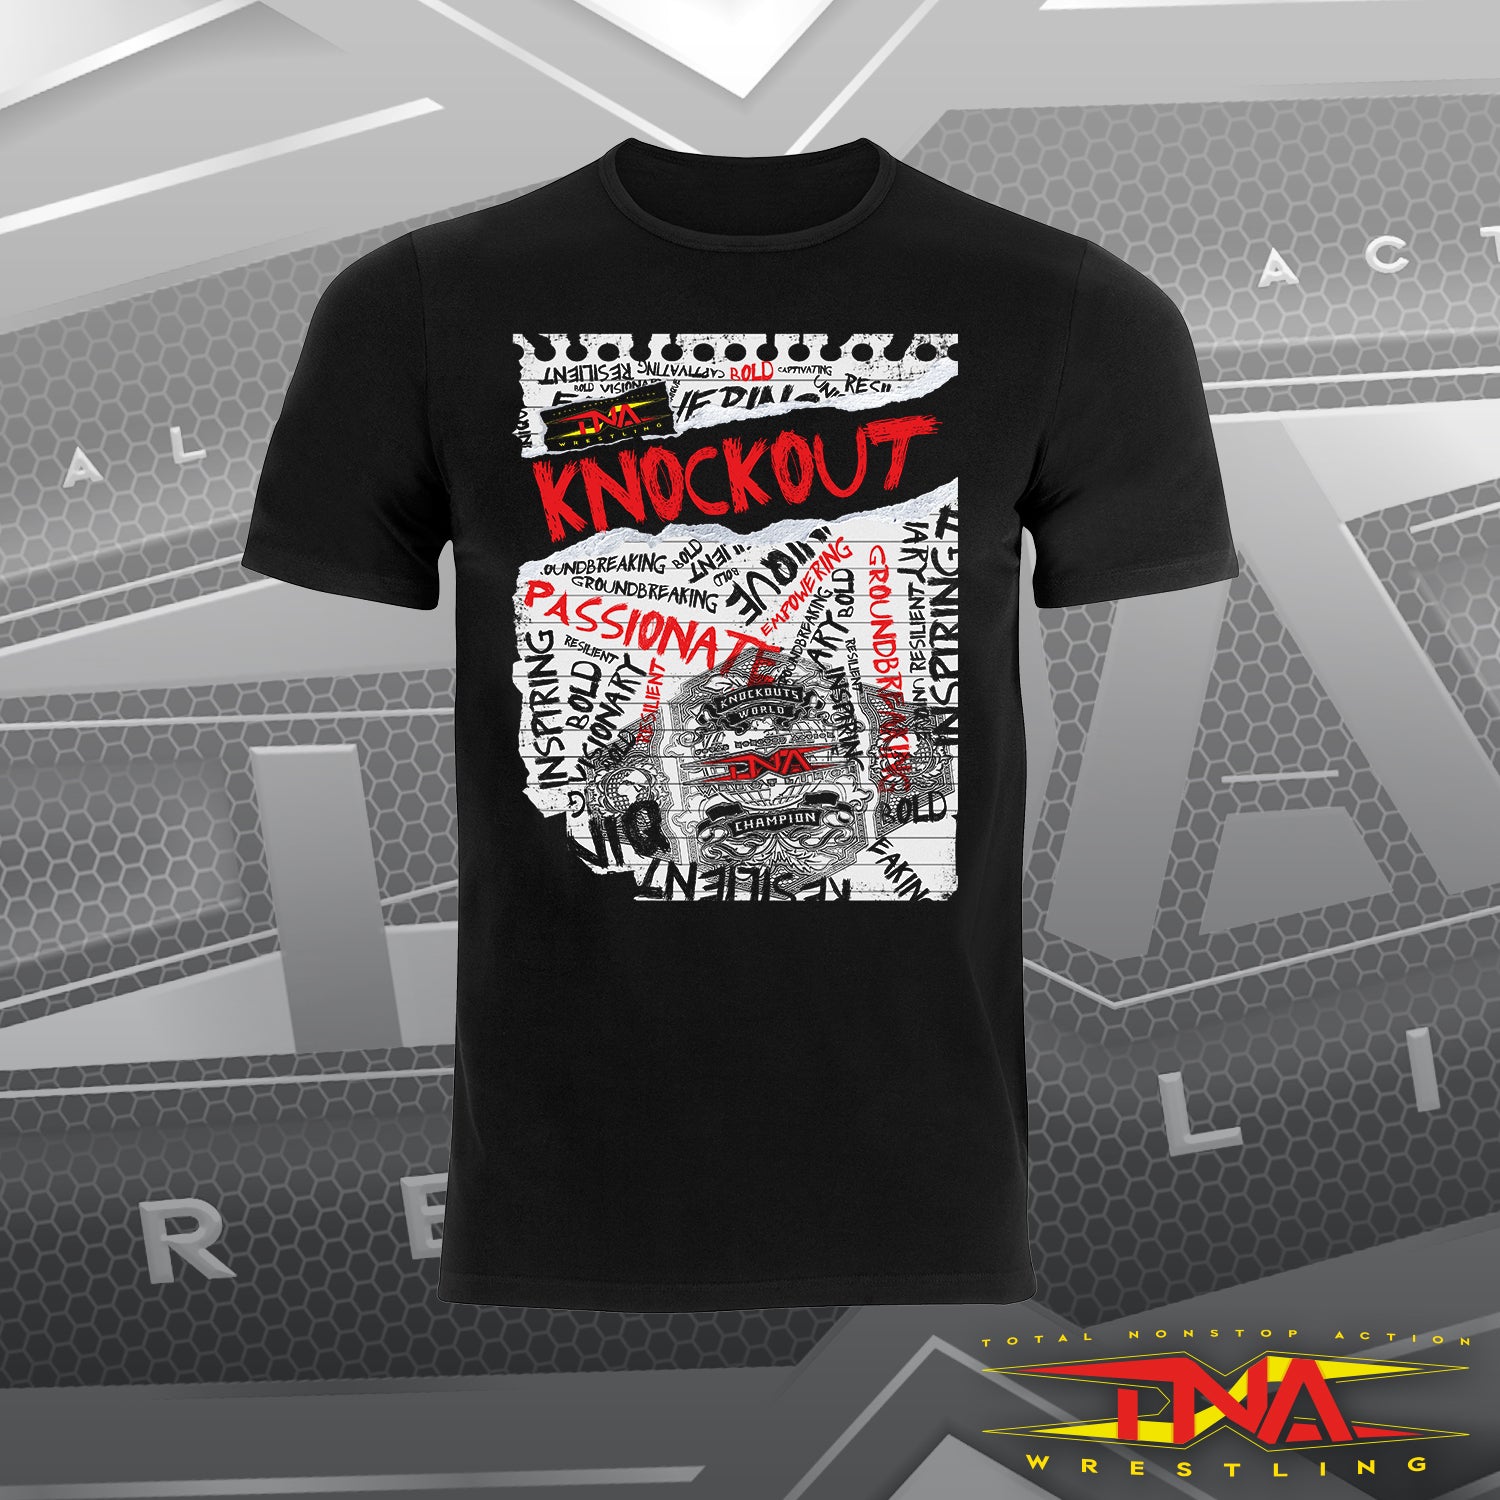 TNA Knockout T-Shirt